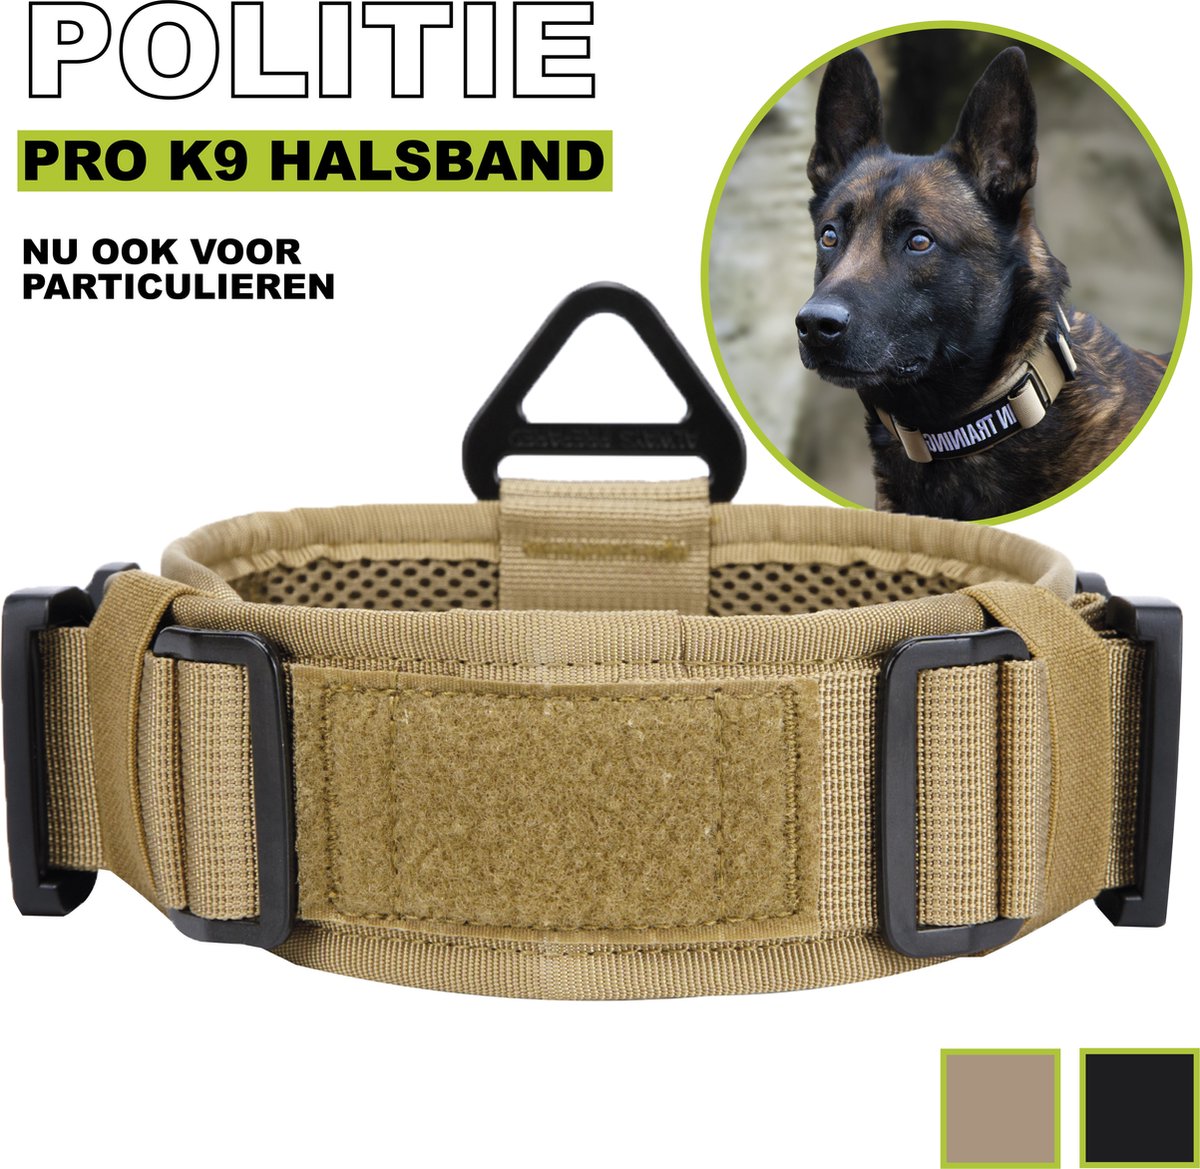 Always Prepared © Pro K9 Halsband Hond - Hals 35-75 CM - Hondenhalsband - geschikt voor iedere hondenriem - voor middel en grote honden - Best getest 2022 - 450KG Anti trek test - One Size Black - Always Prepared